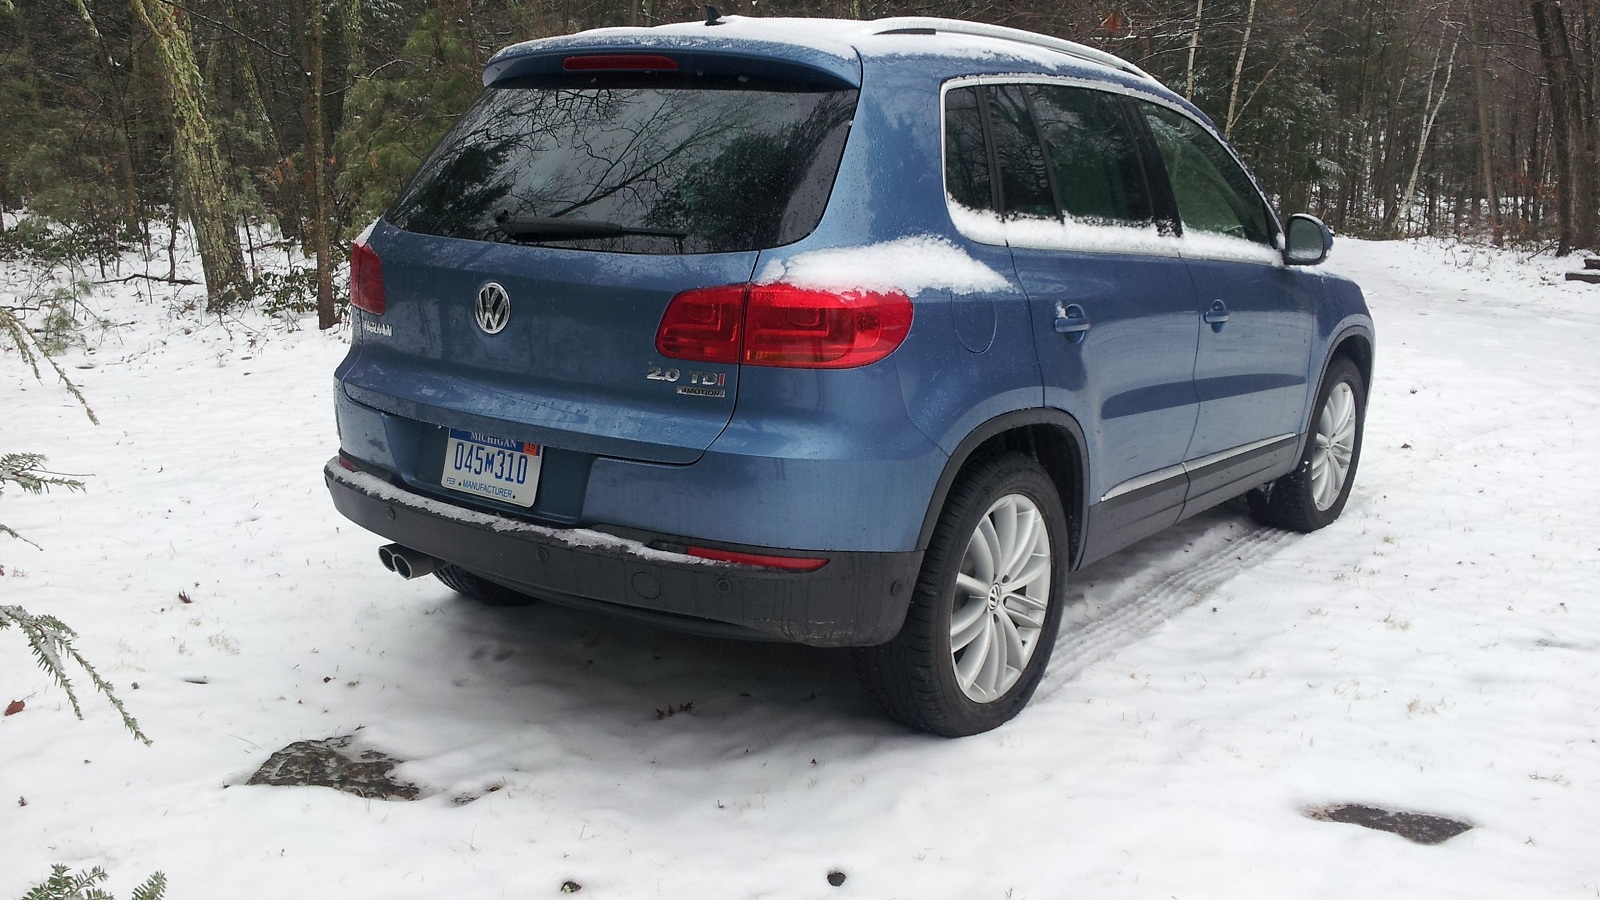 Volkswagen Tiguan TDI (European model), Catskill Mountains, NY, Dec 2013